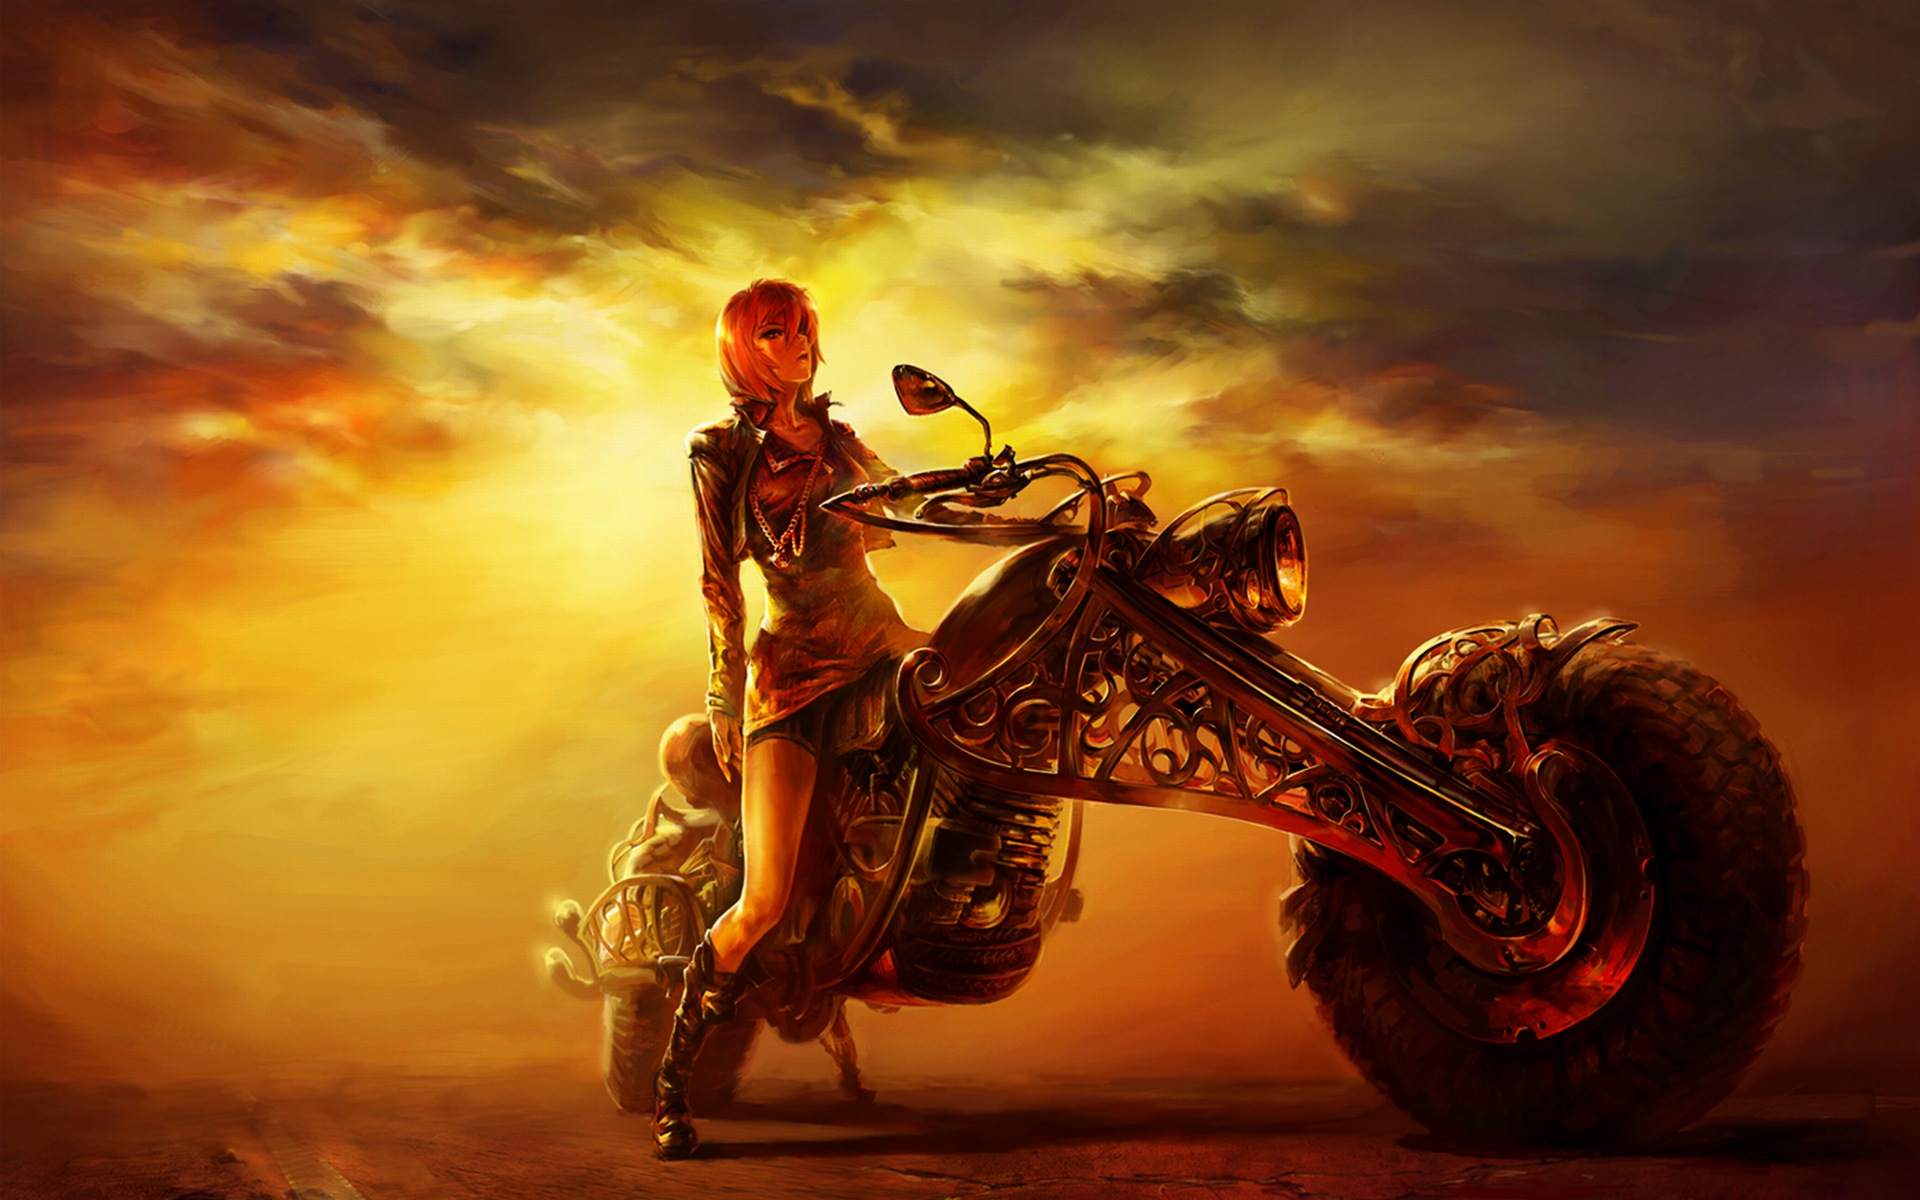 cg 소녀 바탕 화면,오토바이,차량,사막 경주,오토바이 타기,하늘